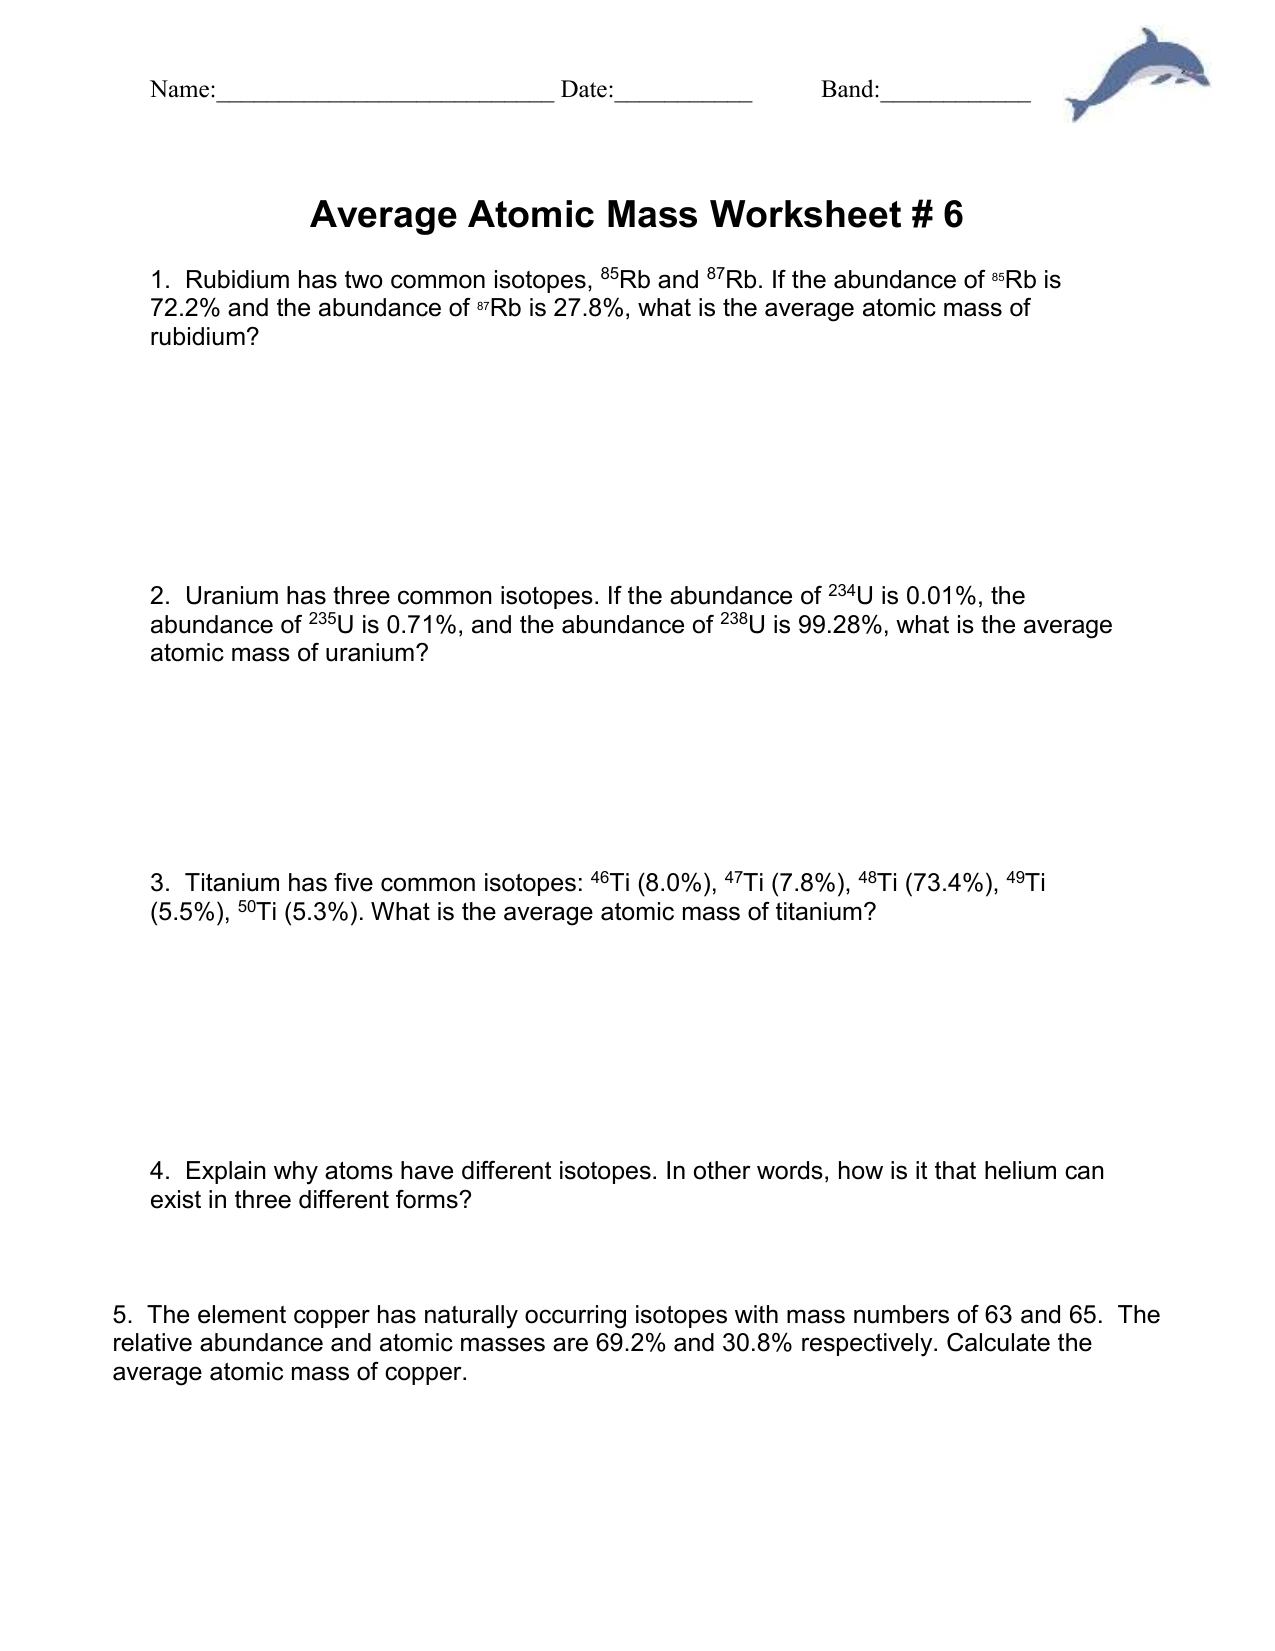 Ch 11 Average atomic mass worksheet Within Average Atomic Mass Worksheet